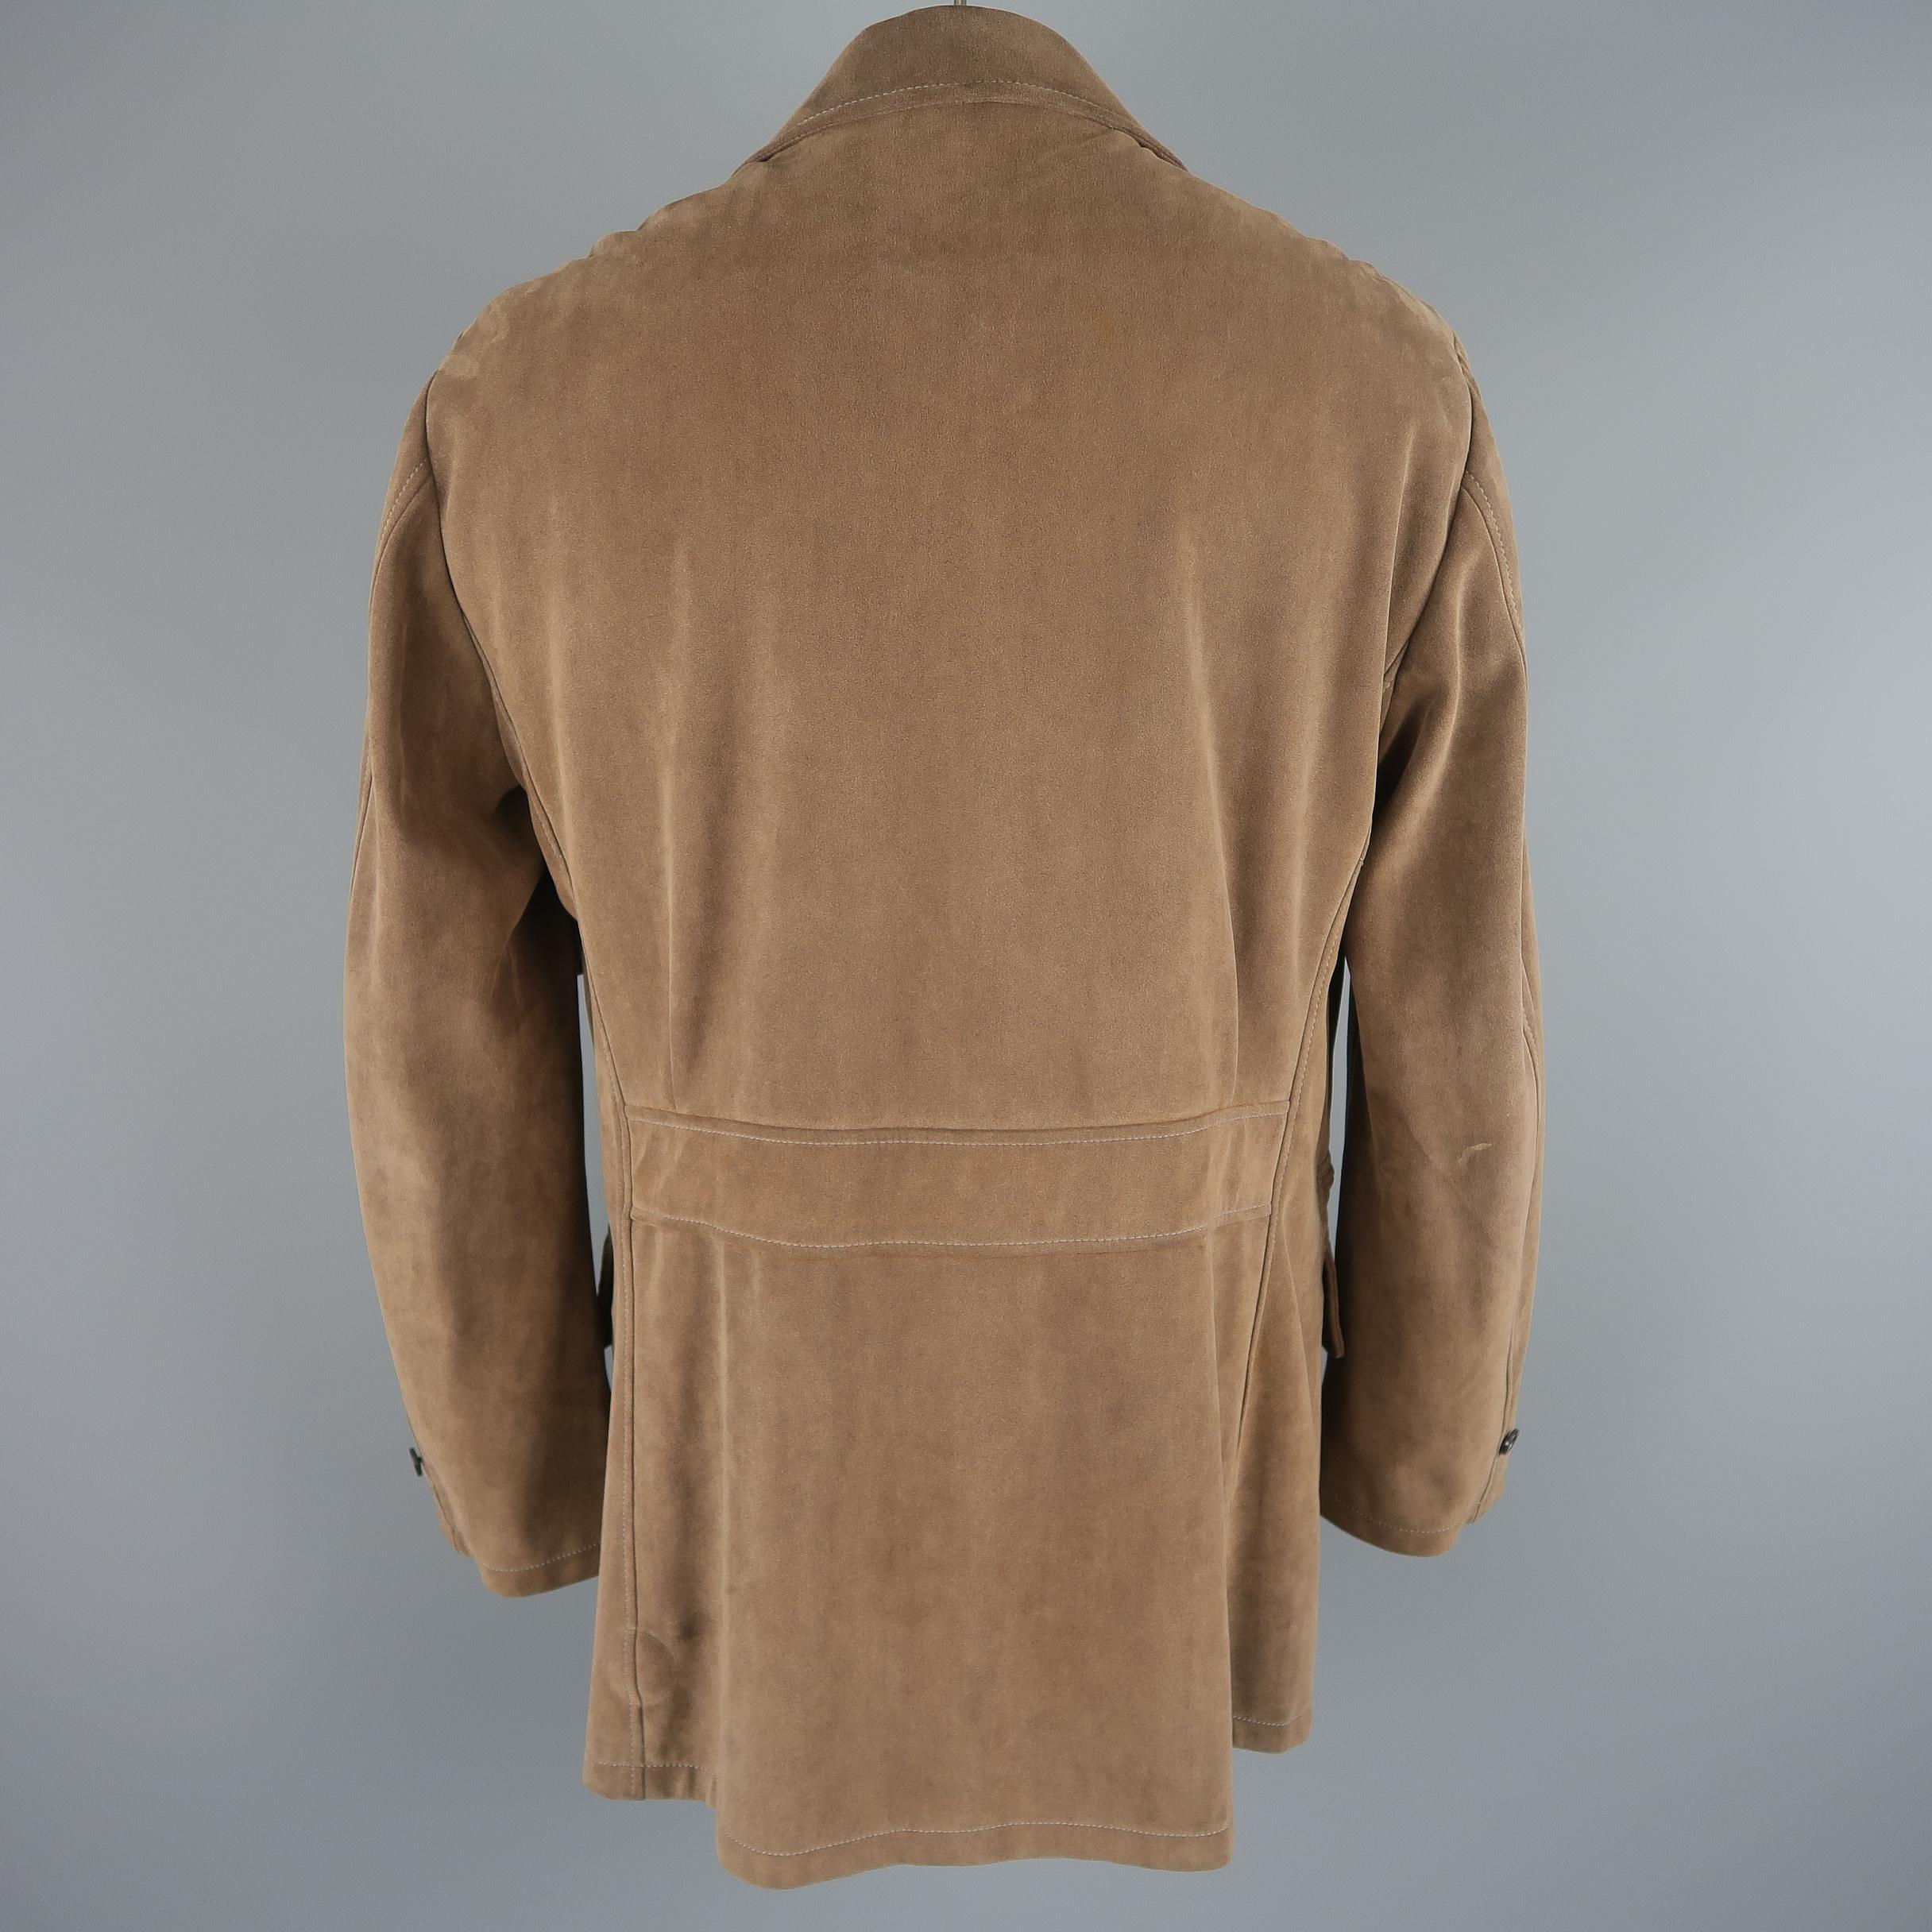 Men's Armani Collezioni US 46 / IT 56 Taupe Microsuede Pointed Lapel Coat Jacket 2